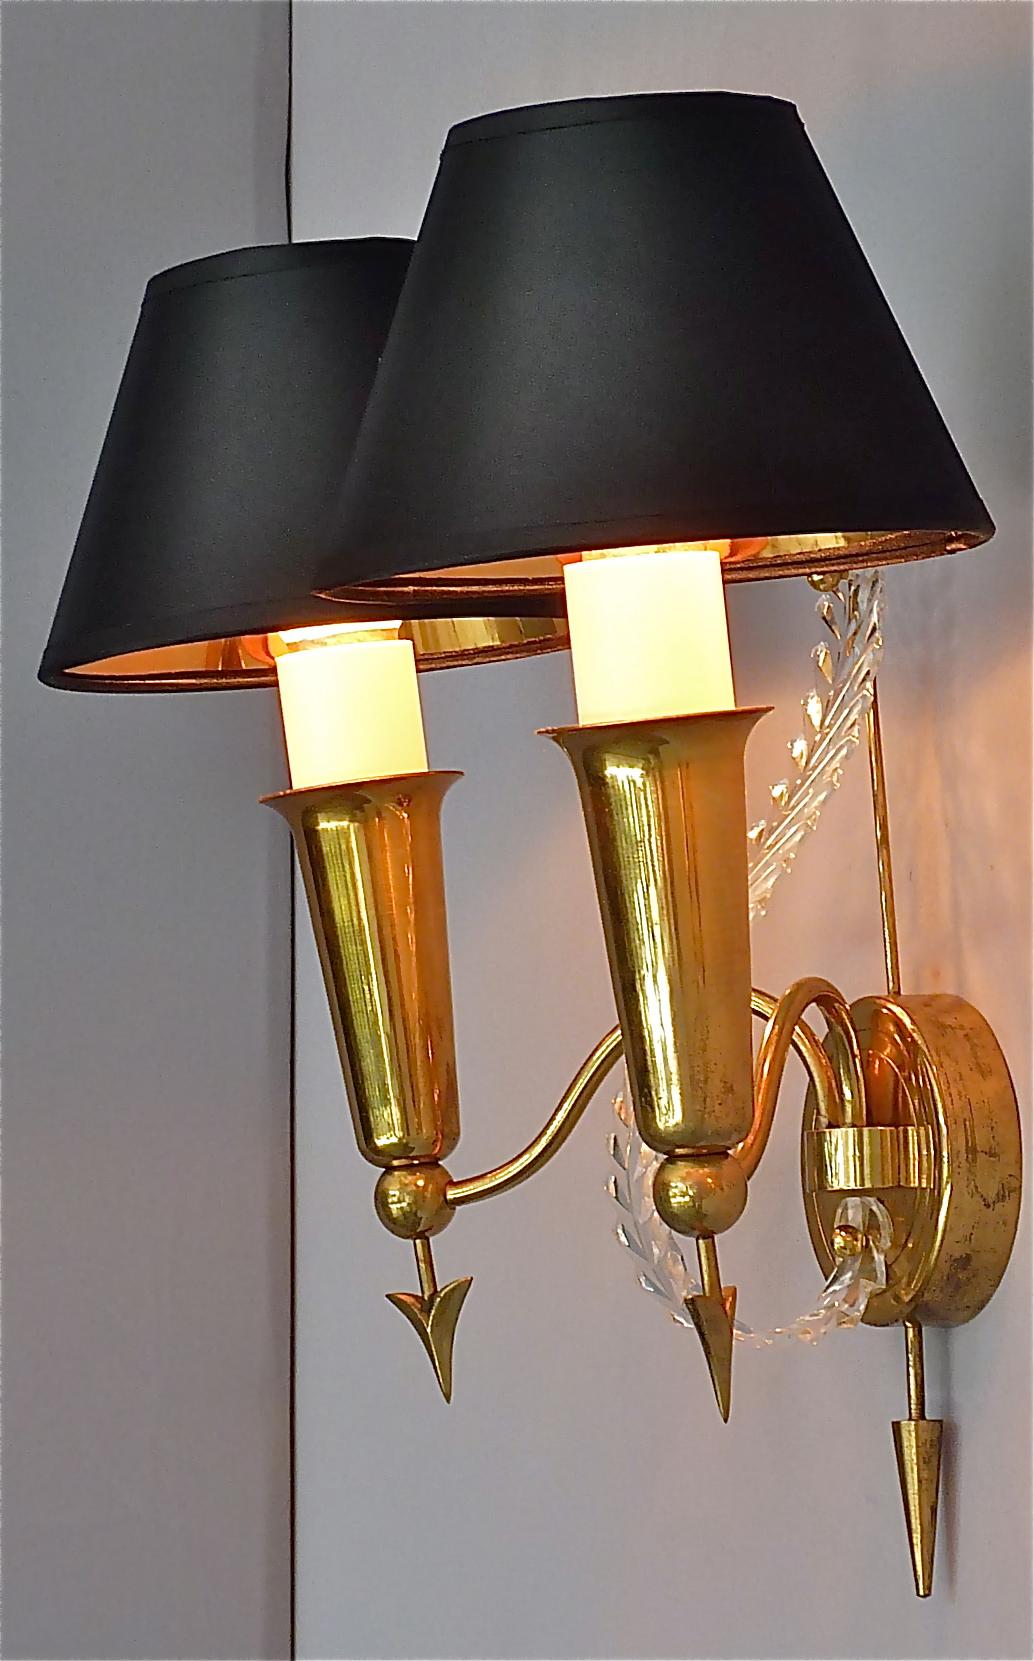 Pair of Maison Arlus Midcentury Sconces Jansen Arrow Brass Lamp, Gio Ponti Style 1